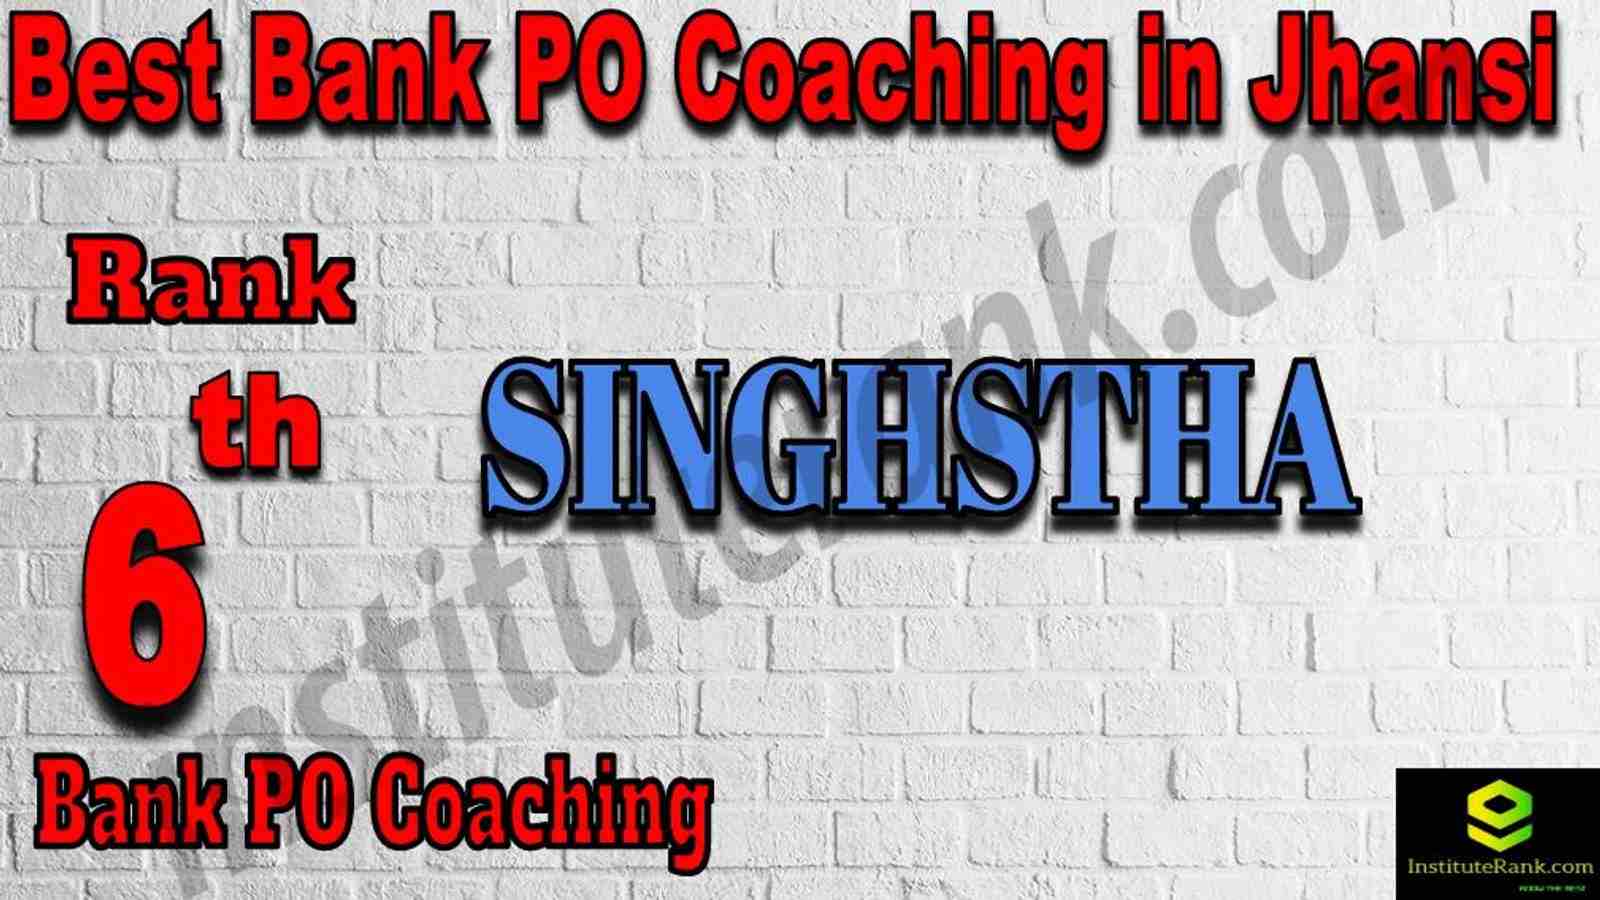 6th Best Bank PO Coaching in Jhansi